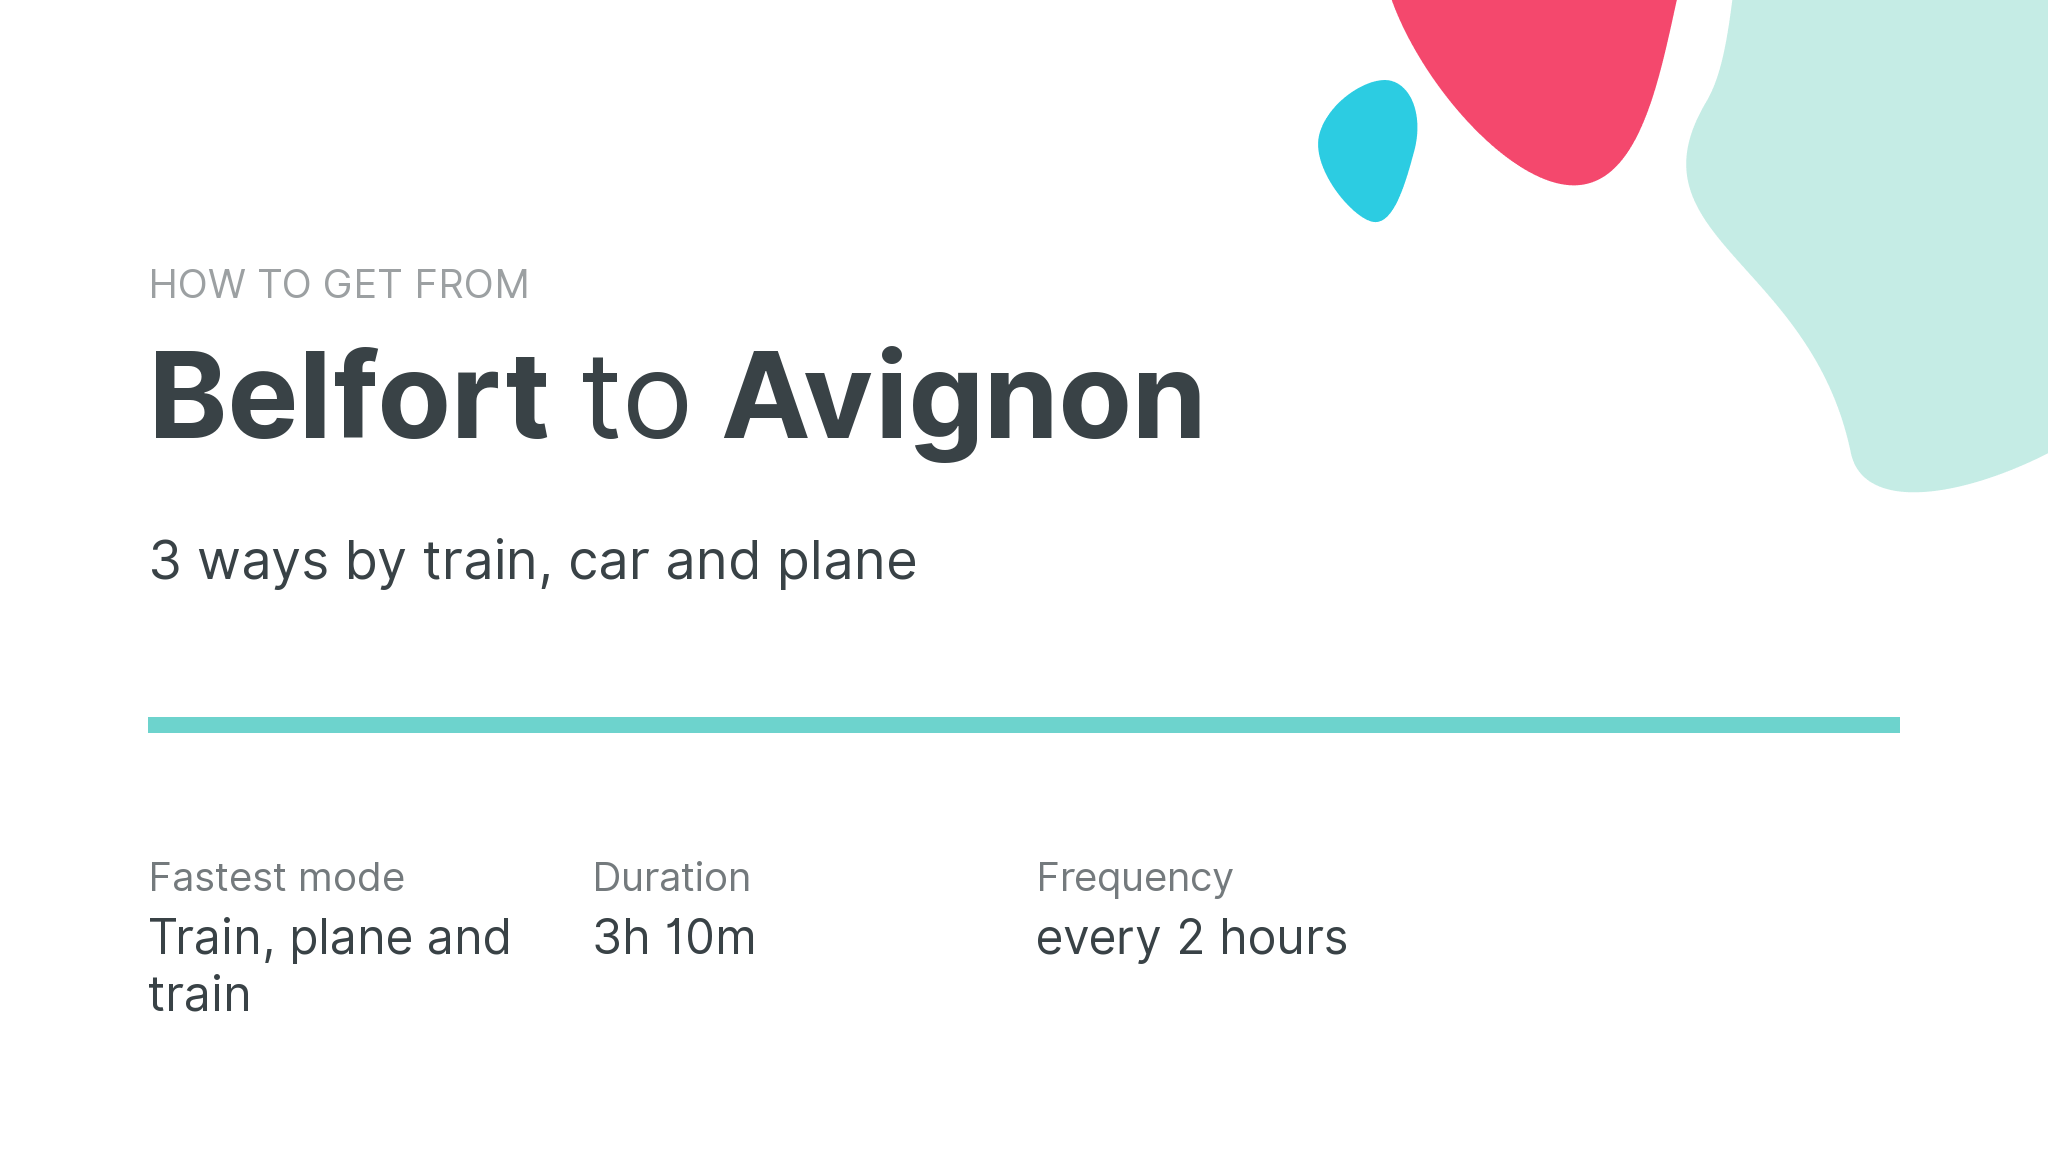 How do I get from Belfort to Avignon